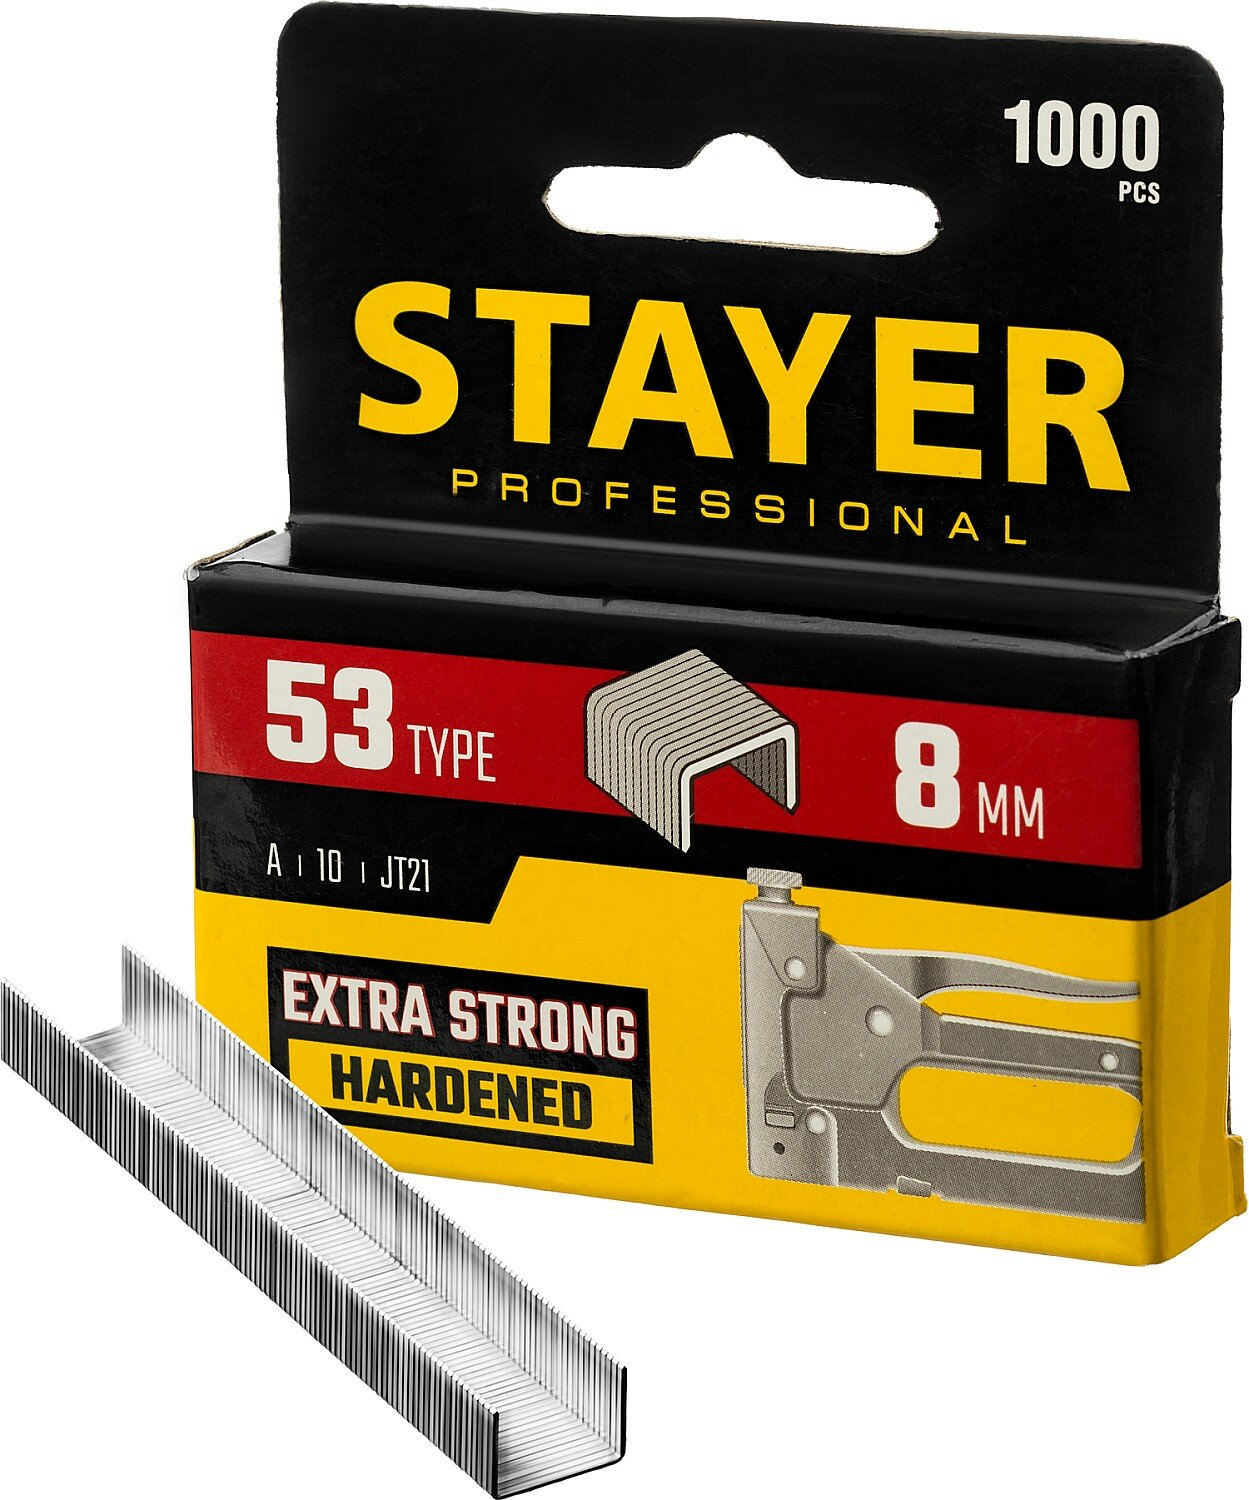 STAYER тип 53 (A/10/JT21) 8 мм 1000 шт калибр 23GA скобы для степлера (3159-08)